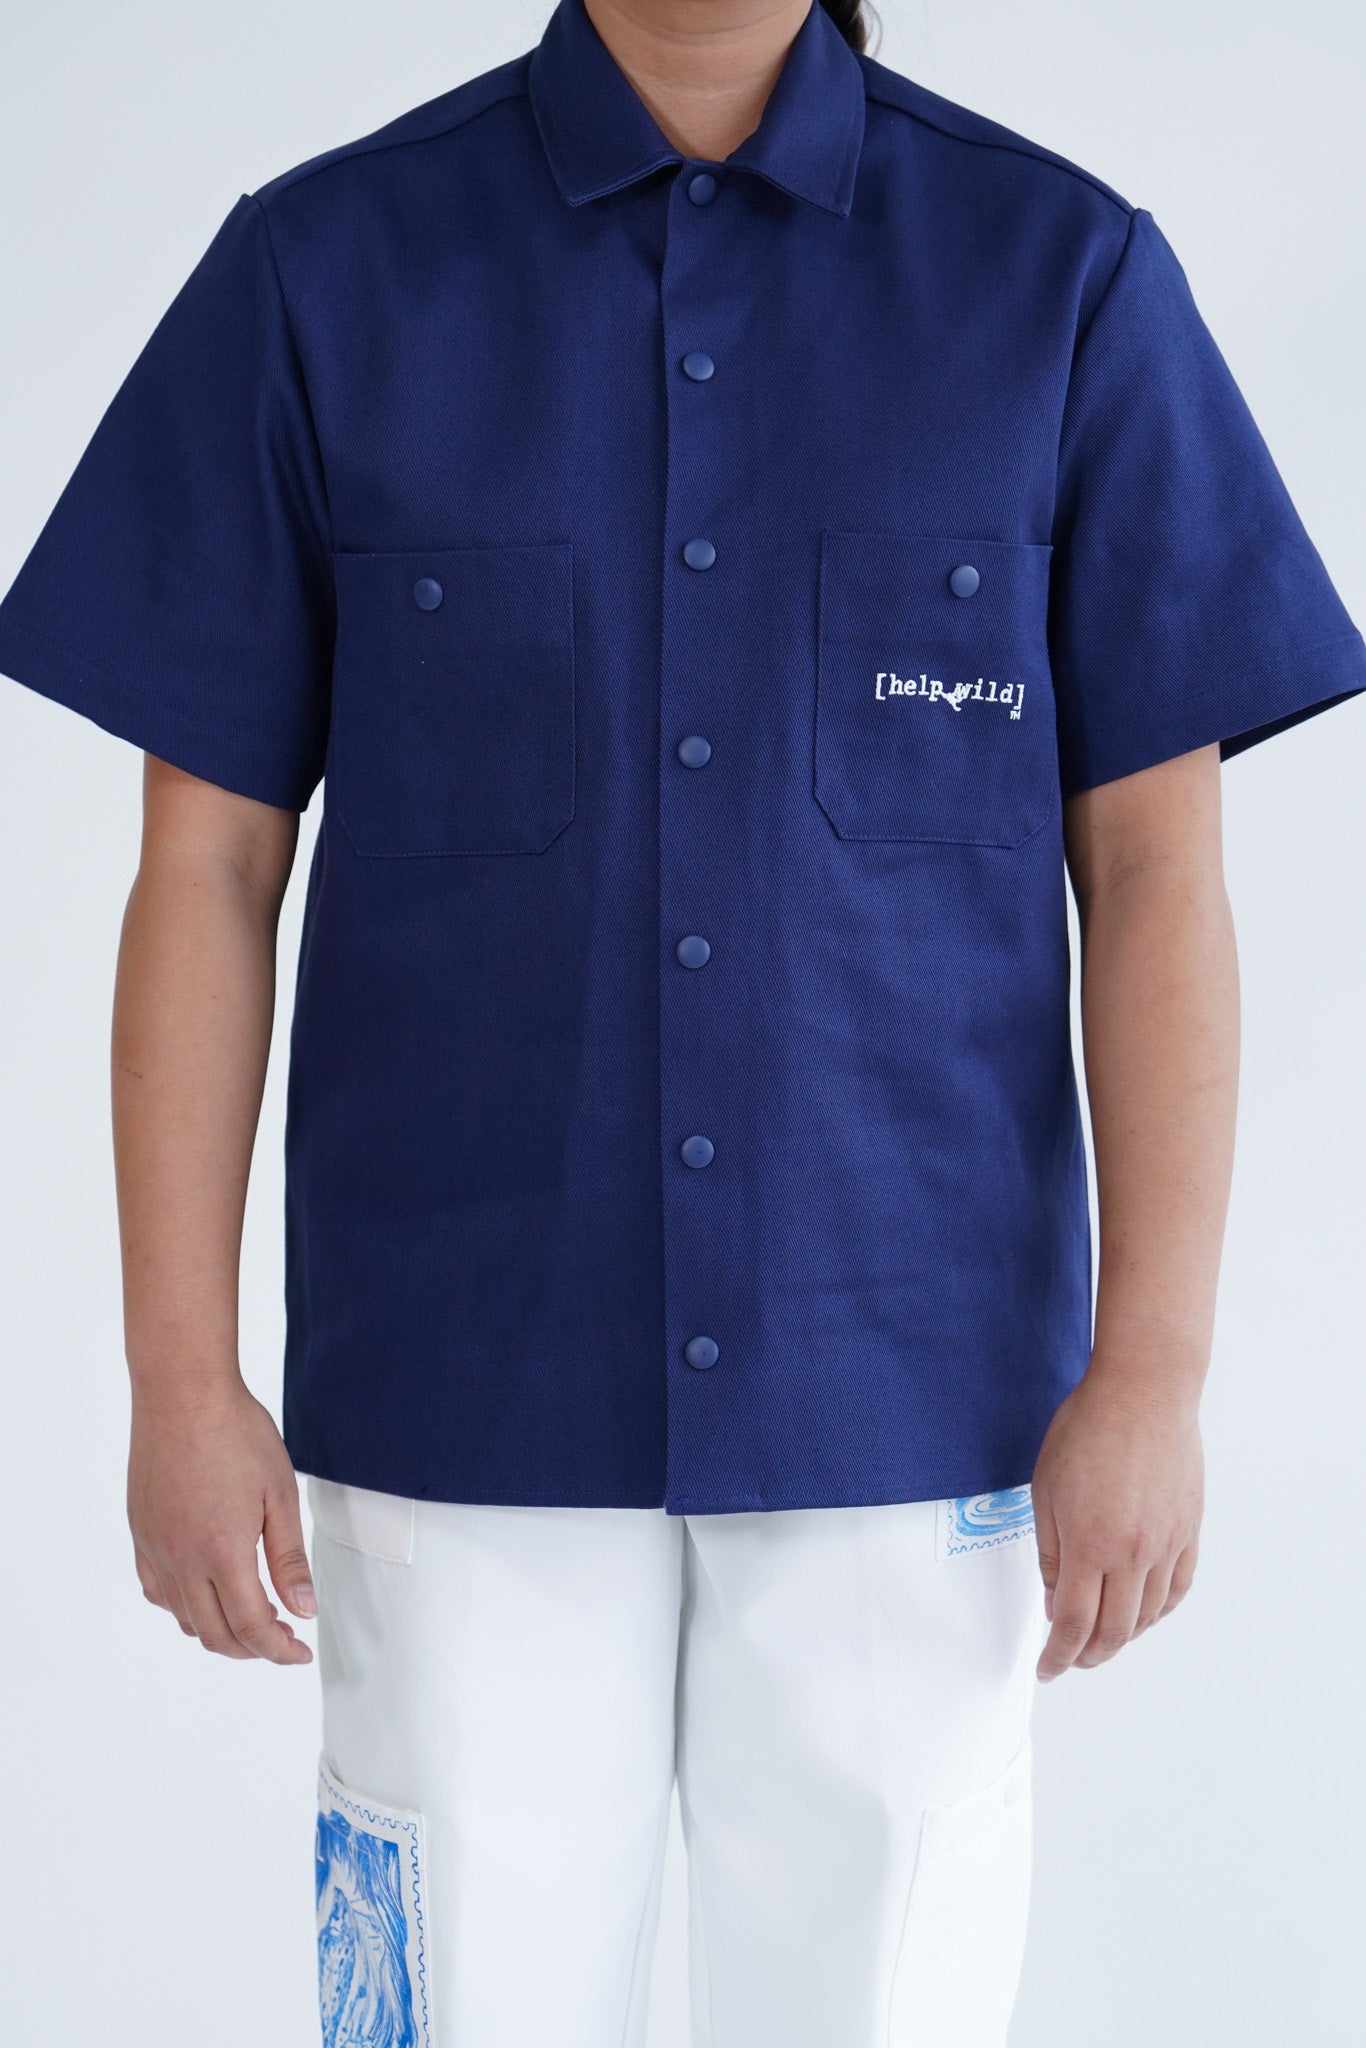 Short Sleeve Work Shirt - Leopard Institute - Navy